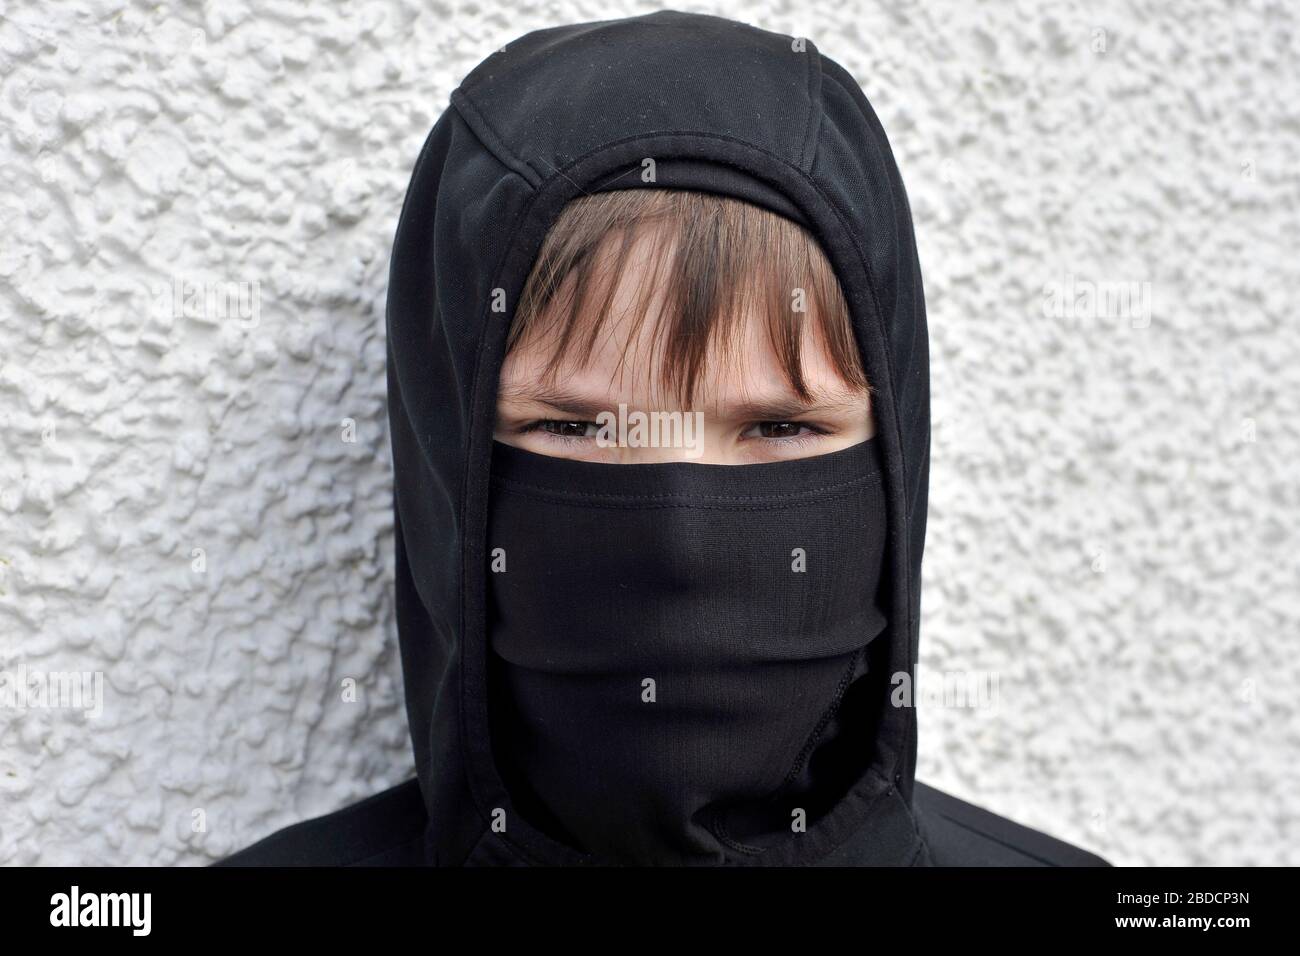 Boy in mask during coronavirus outbreak Stock Photo